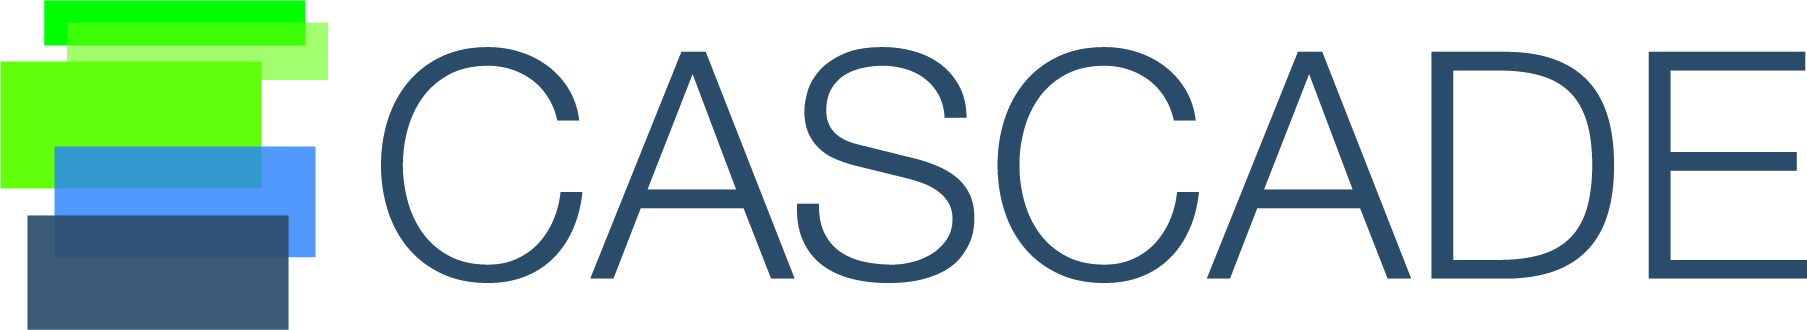 logo for silver sponsor Cascade Environmental